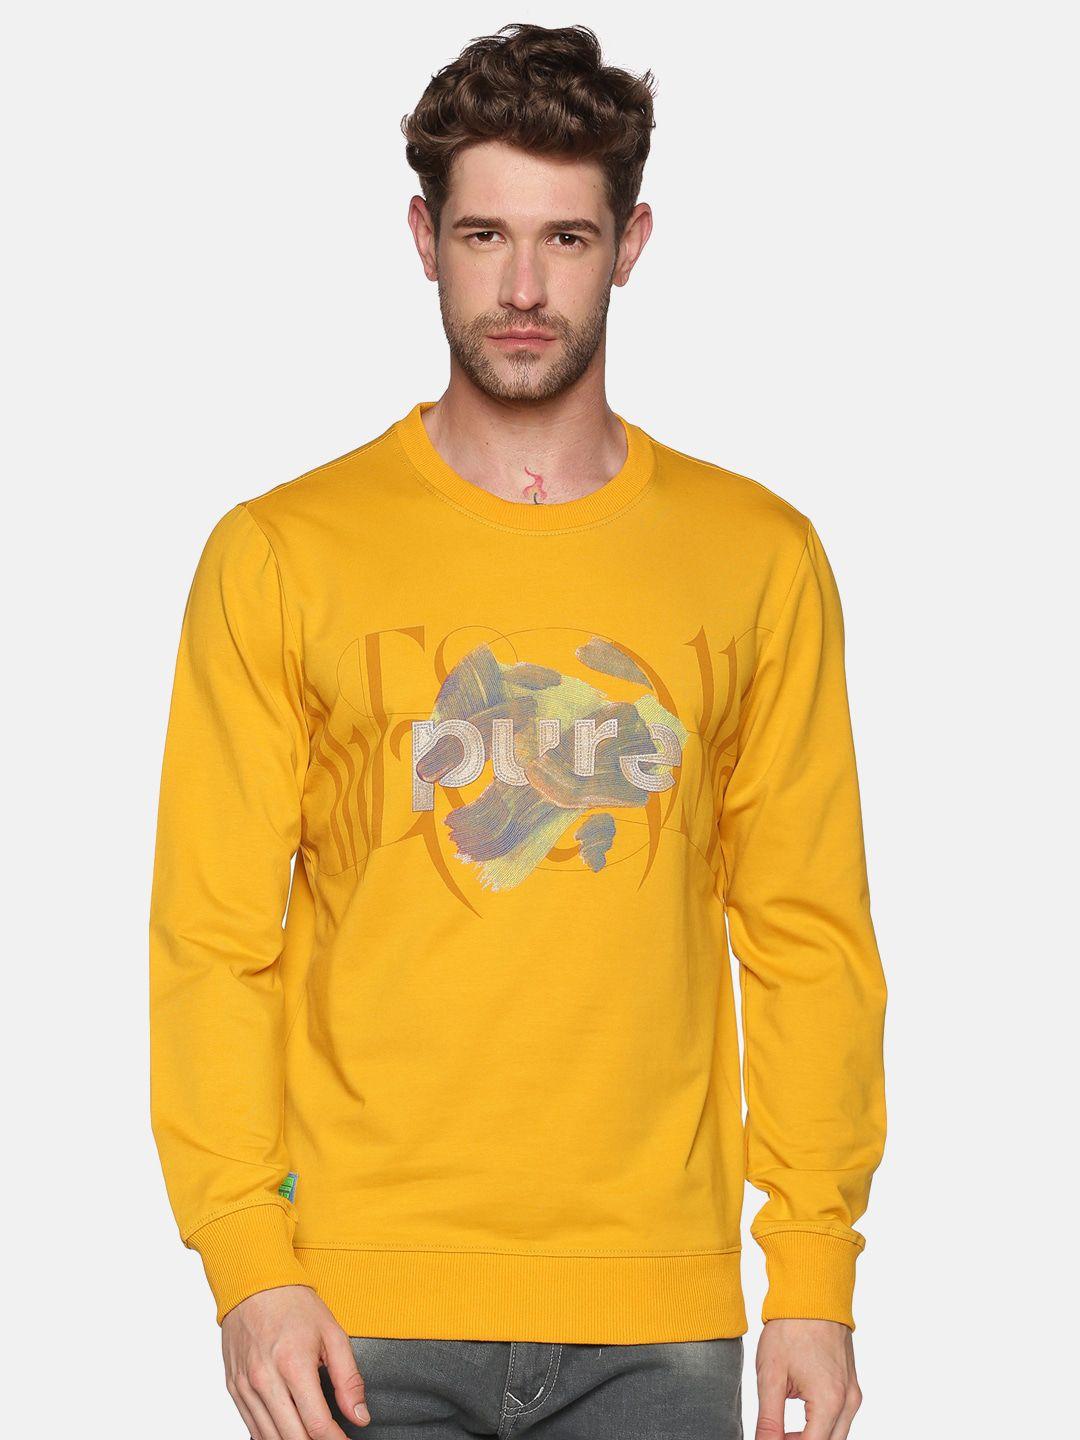 showoff-men-yellow-printed-cotton-sweatshirt